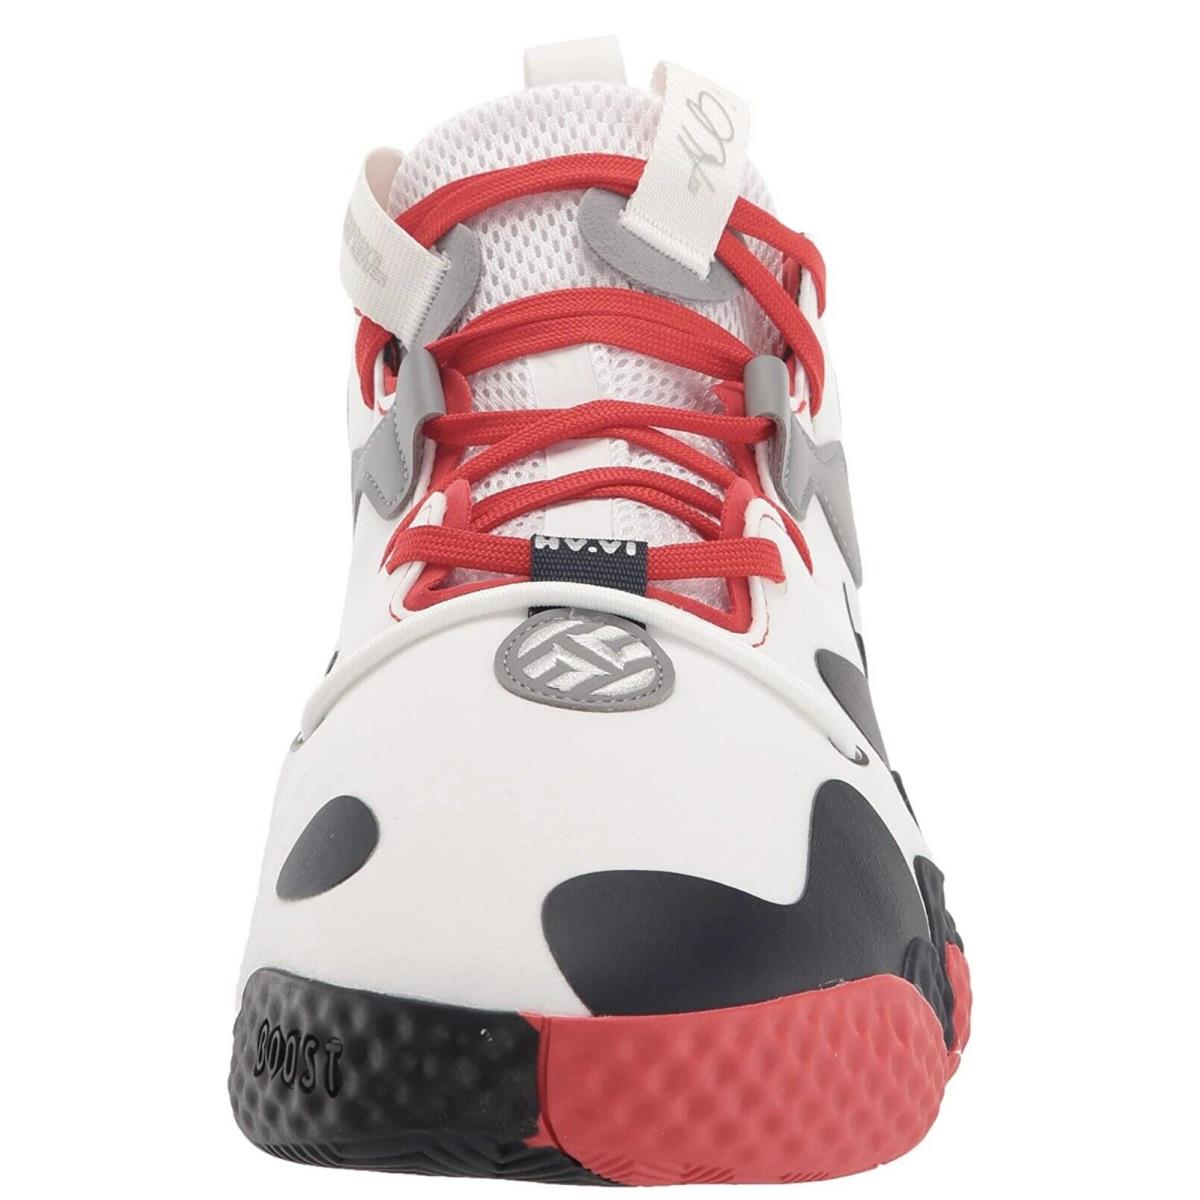 Adidas Unisex-adult Harden Vol. 6 Basketball Shoe Size 7 Women/6 Men